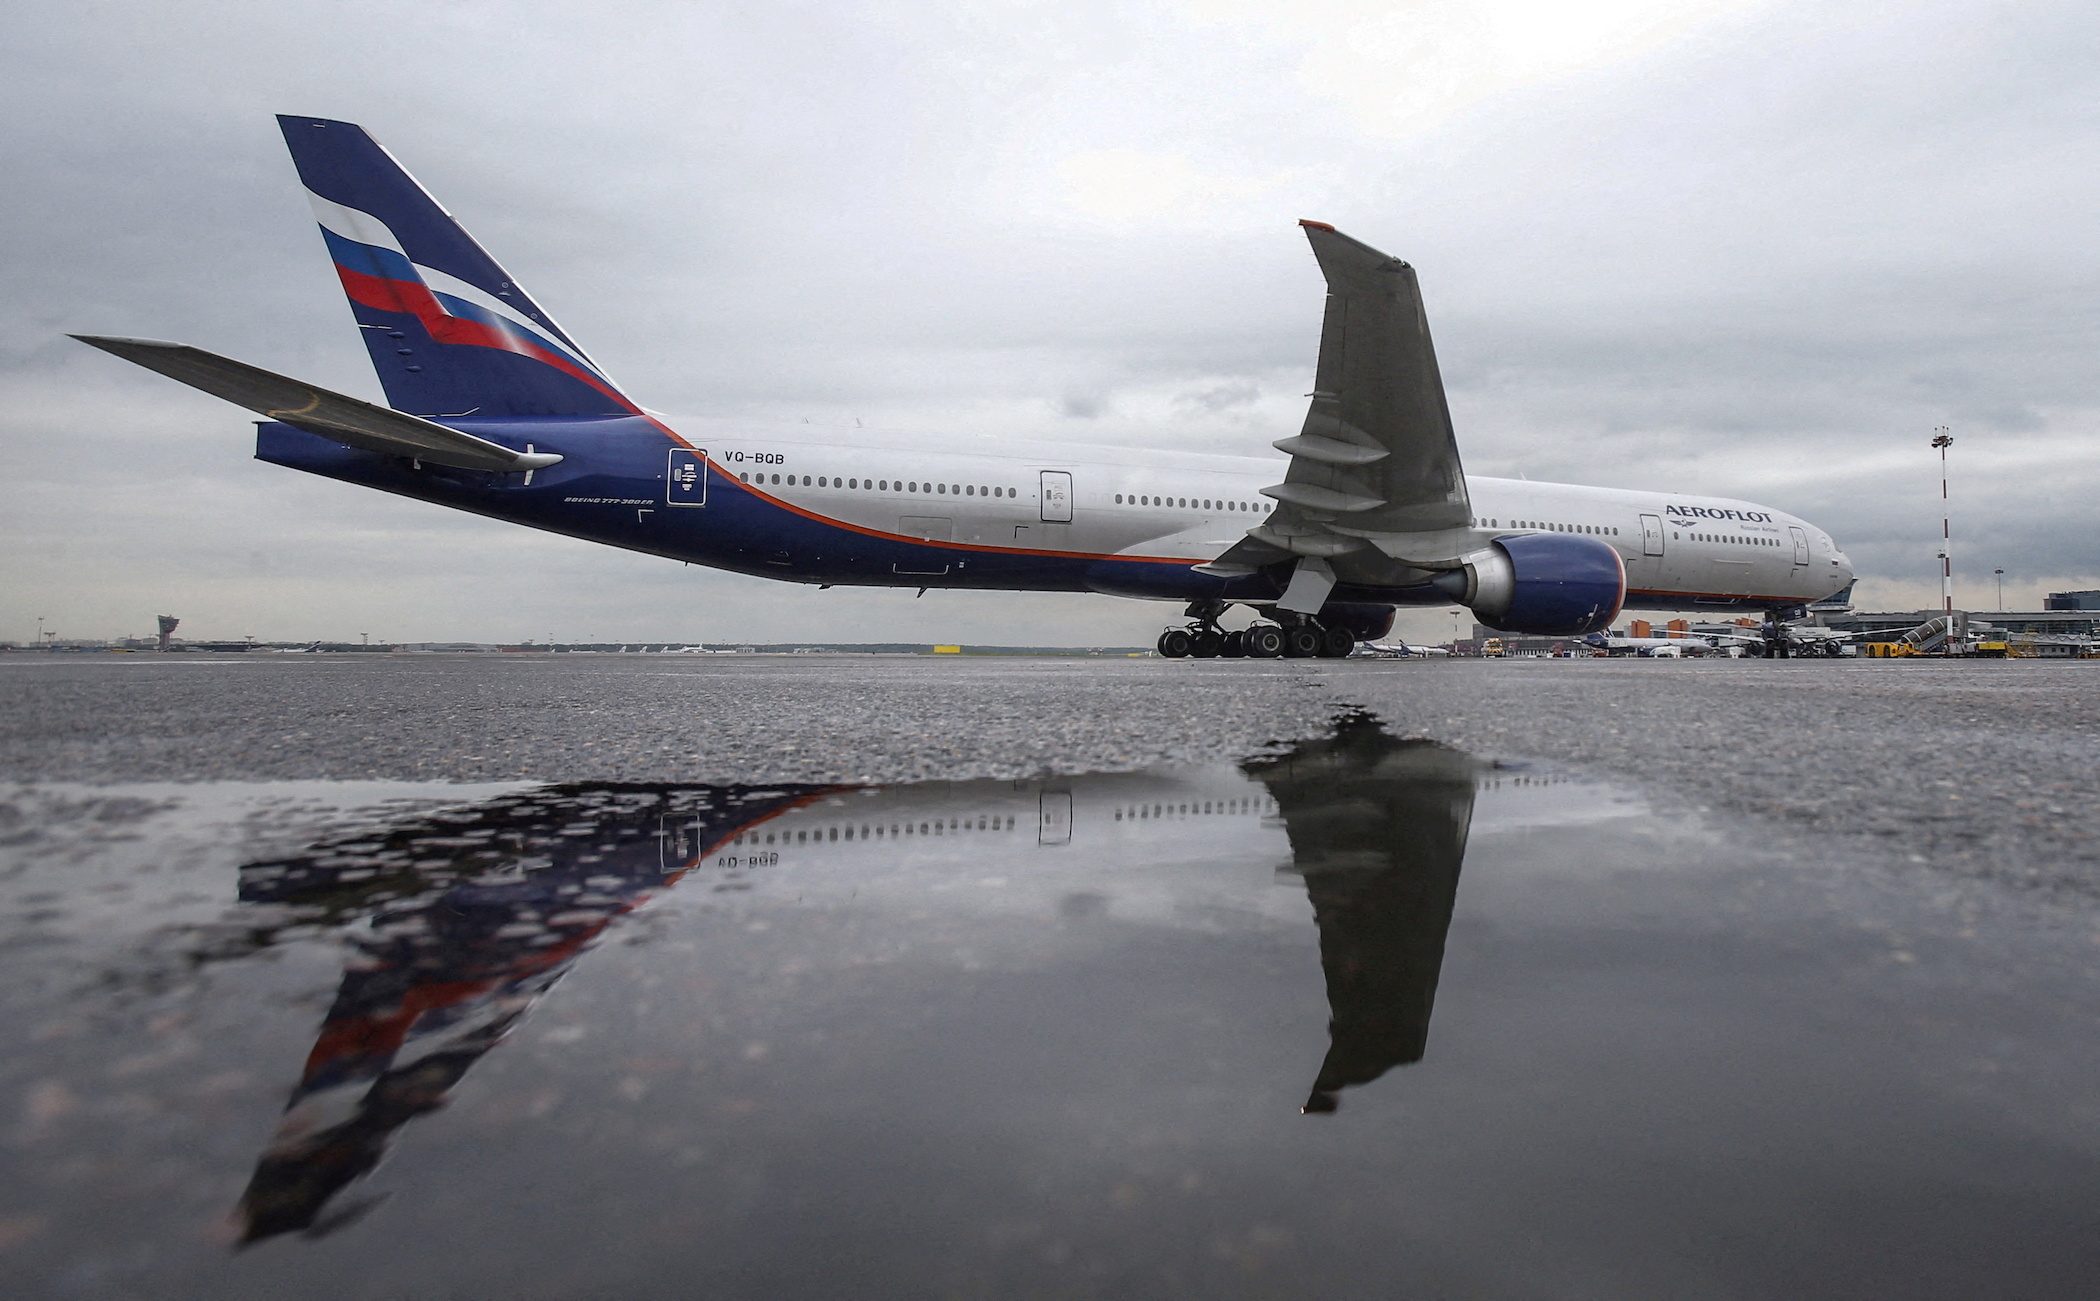 Lessors face legal quagmire as Russian plane repos stall